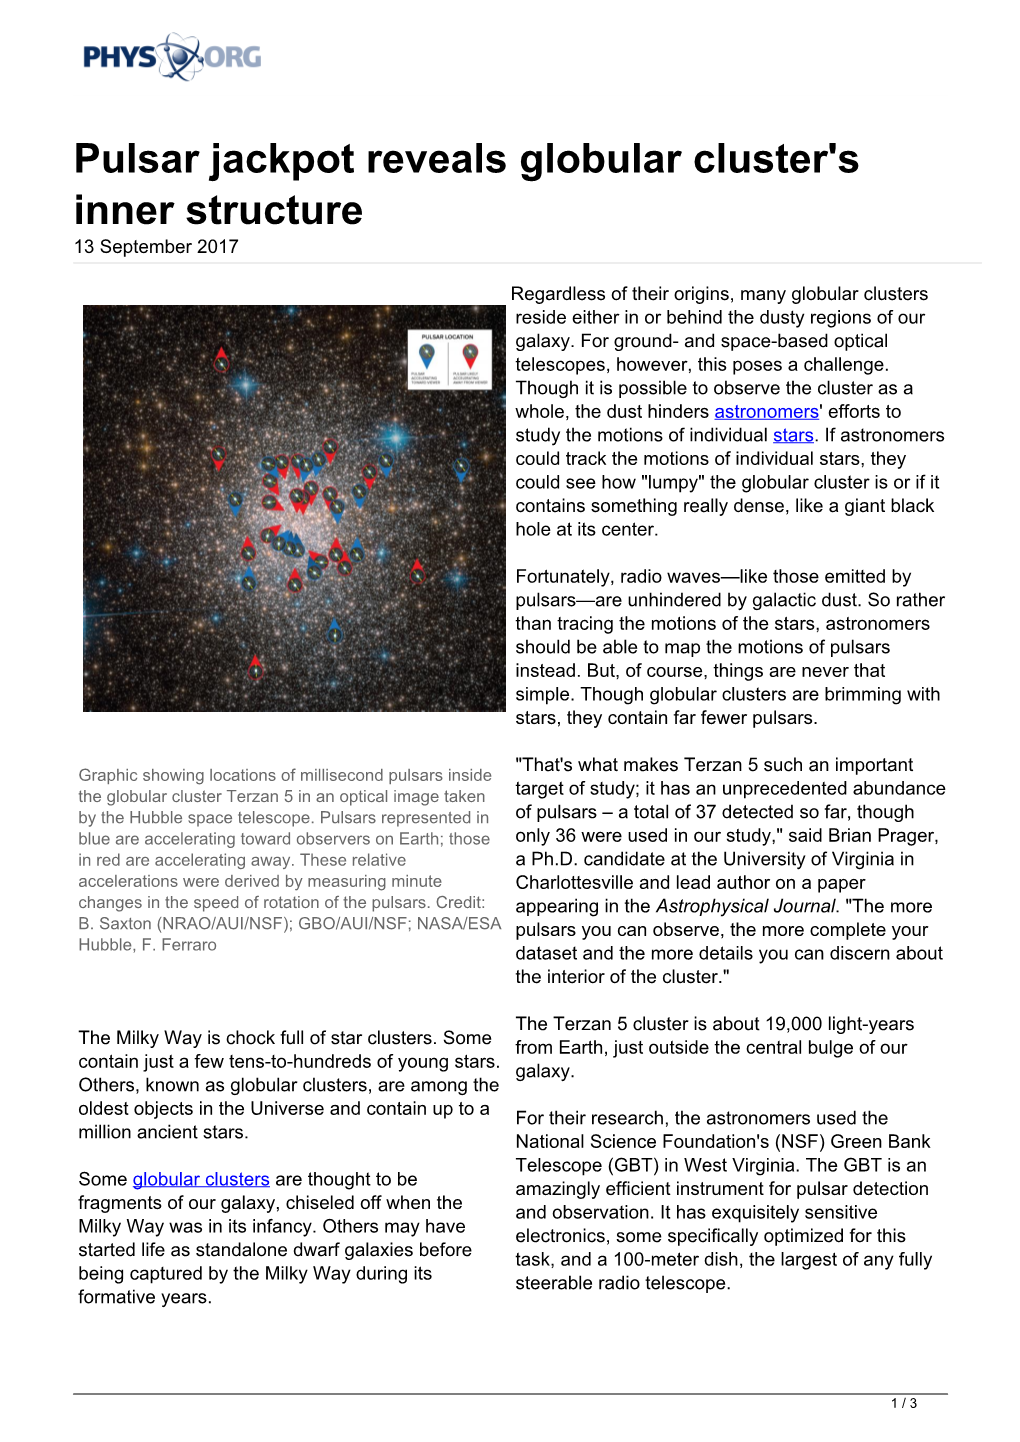 Pulsar Jackpot Reveals Globular Cluster's Inner Structure 13 September 2017